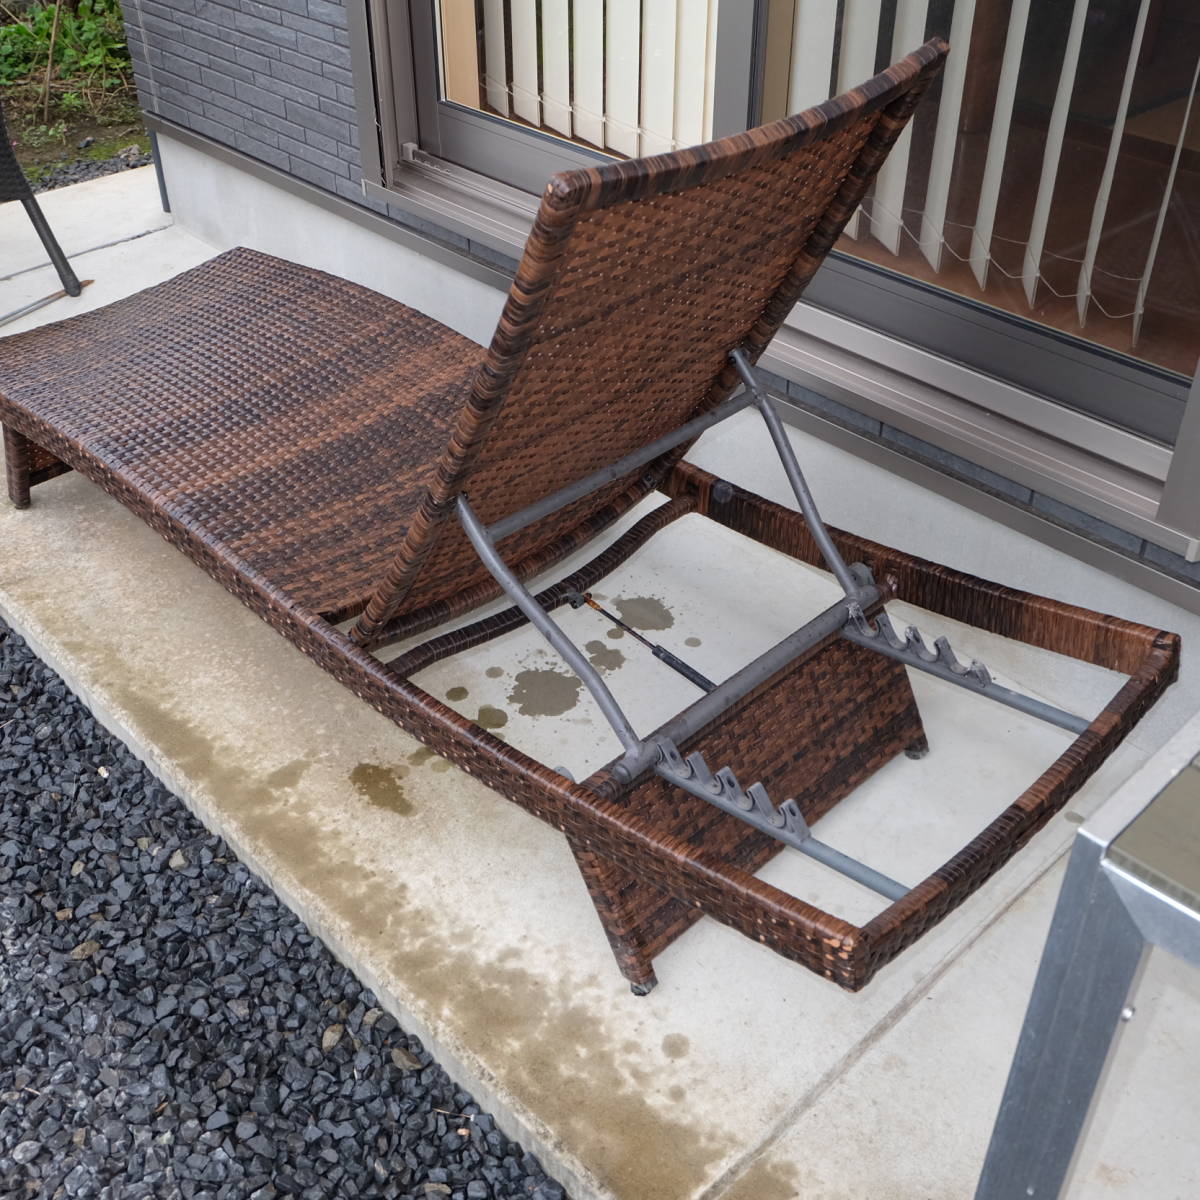  human work rattan outdoors for chaise longue daybed beach bed chair reclining seat garden bench terrace veranda sun bed Asian 